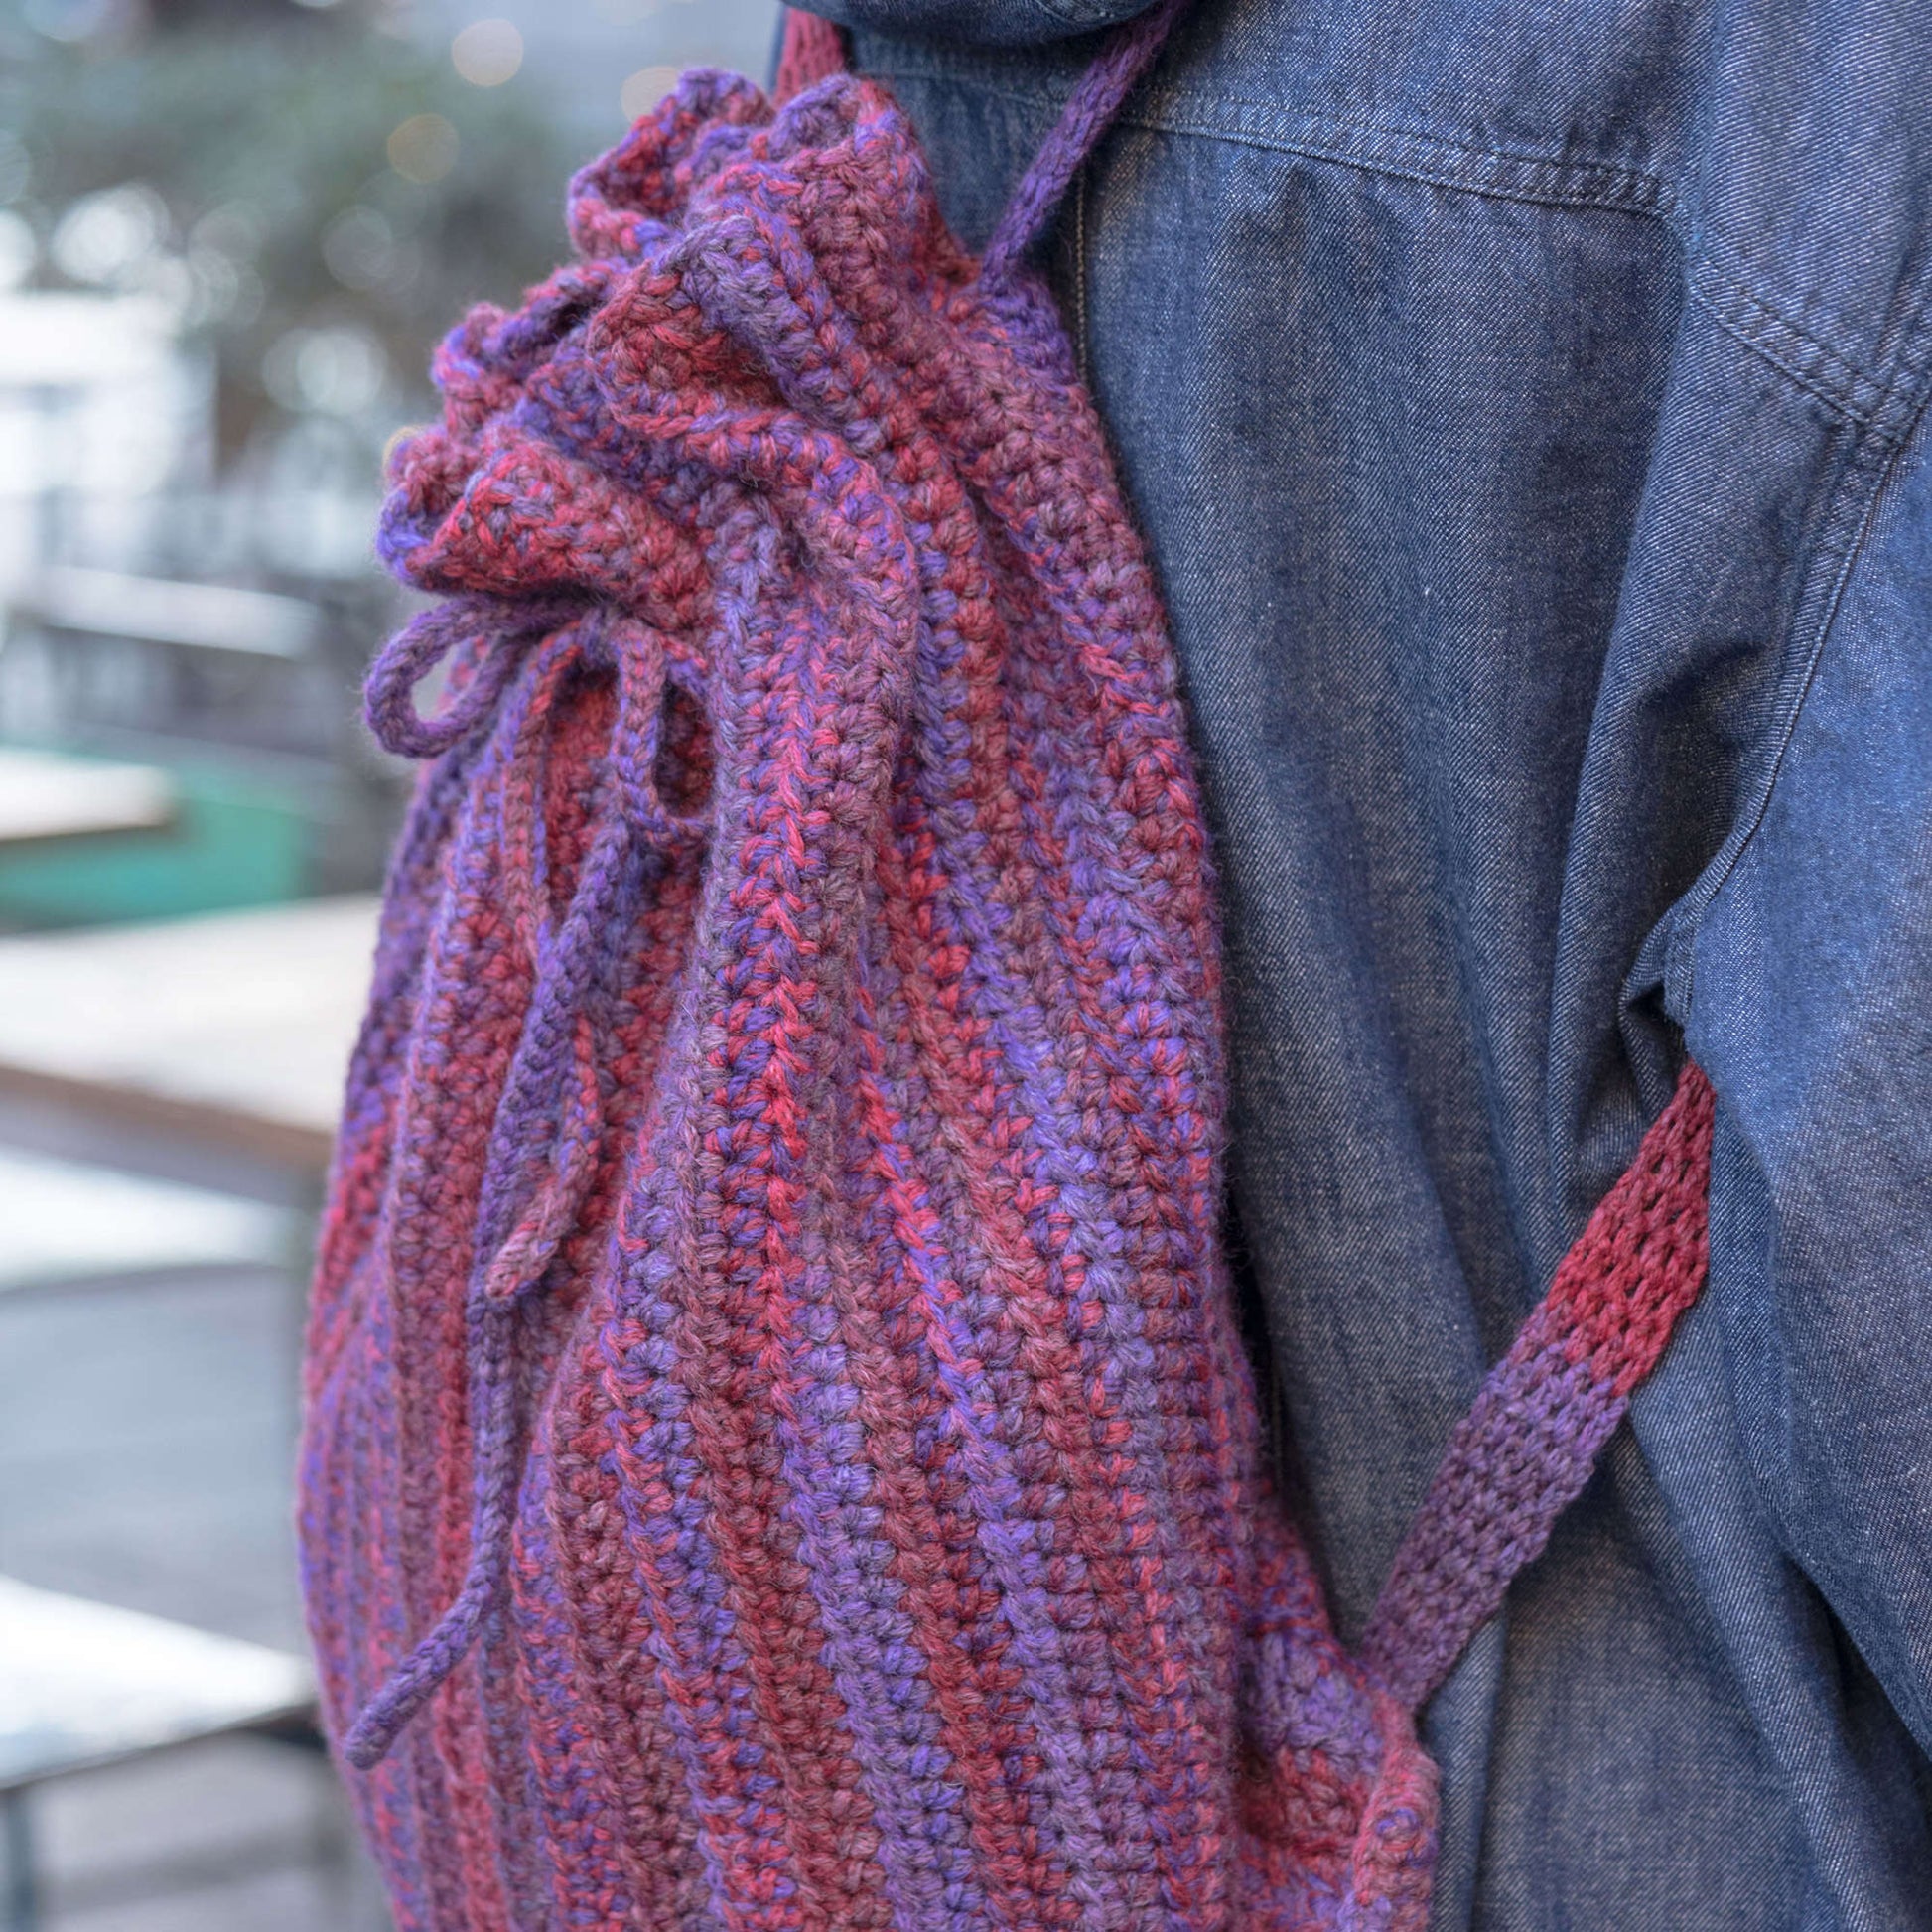 Free Red Heart Crochet Fiore Rucksack Pattern